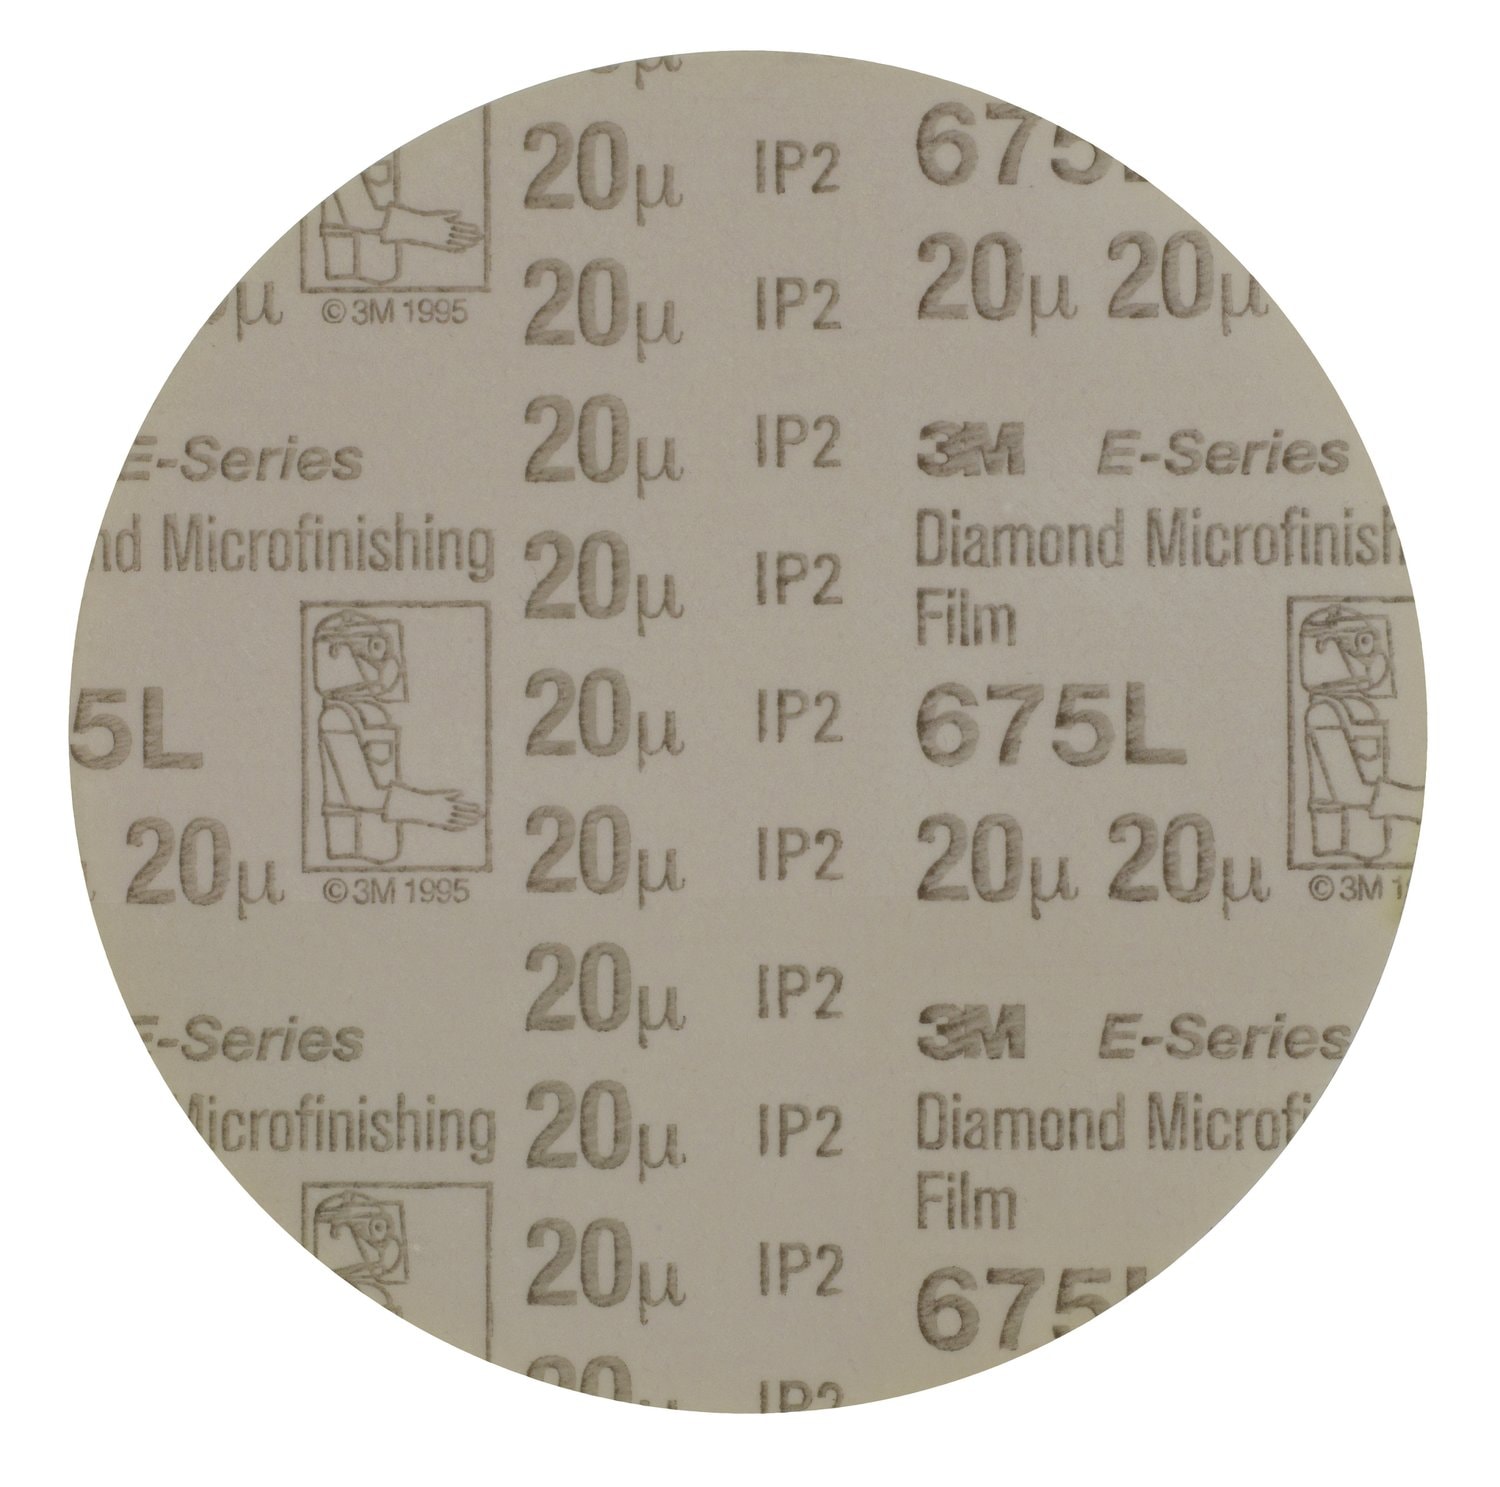 7100045789 - 3M Diamond Microfinishing Film PSA Disc 675L, 20 Mic, Config